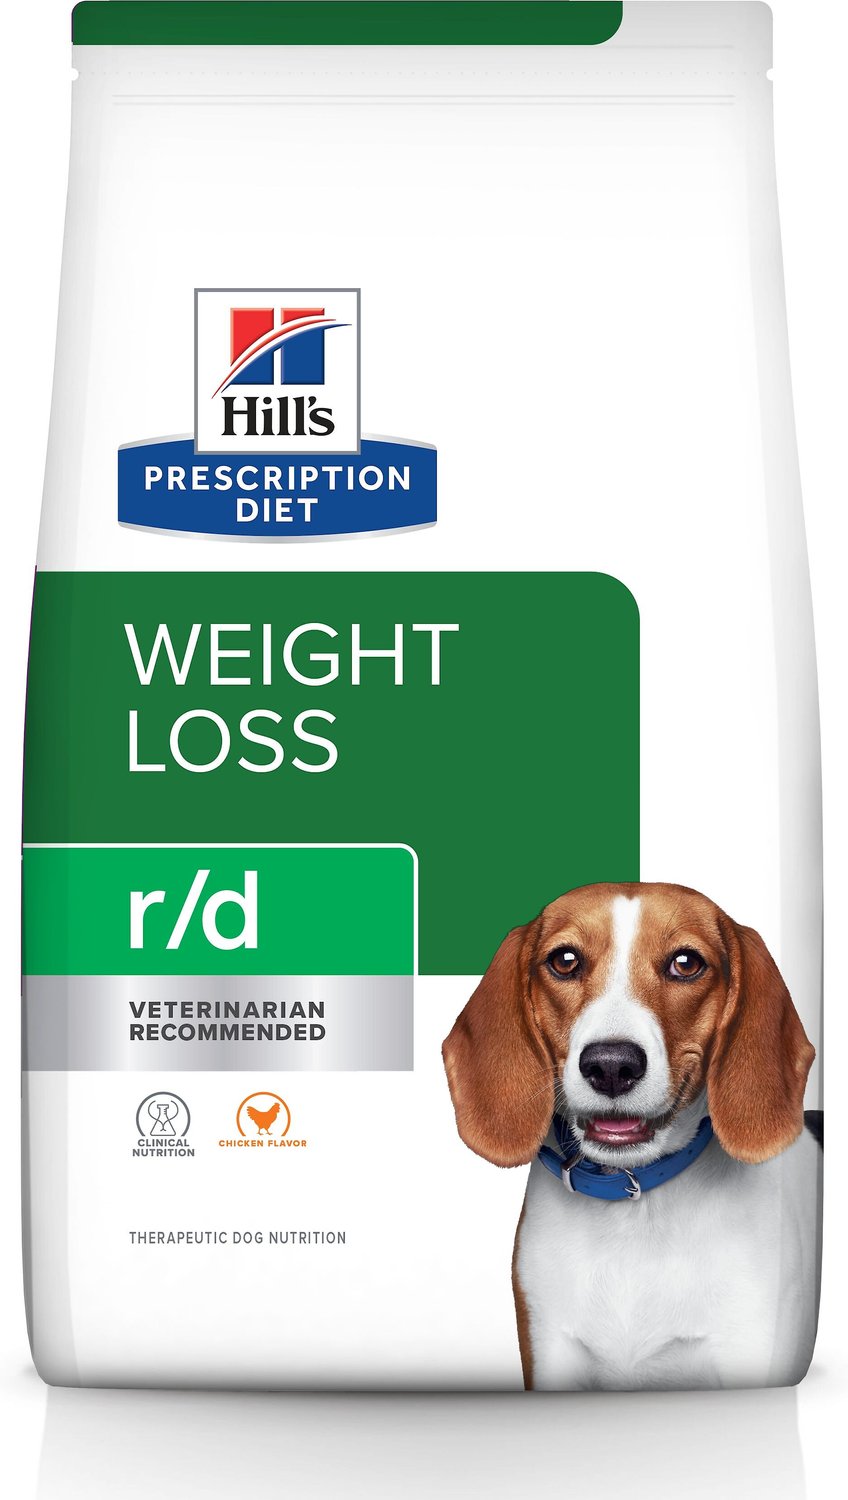 hills weight loss dog food